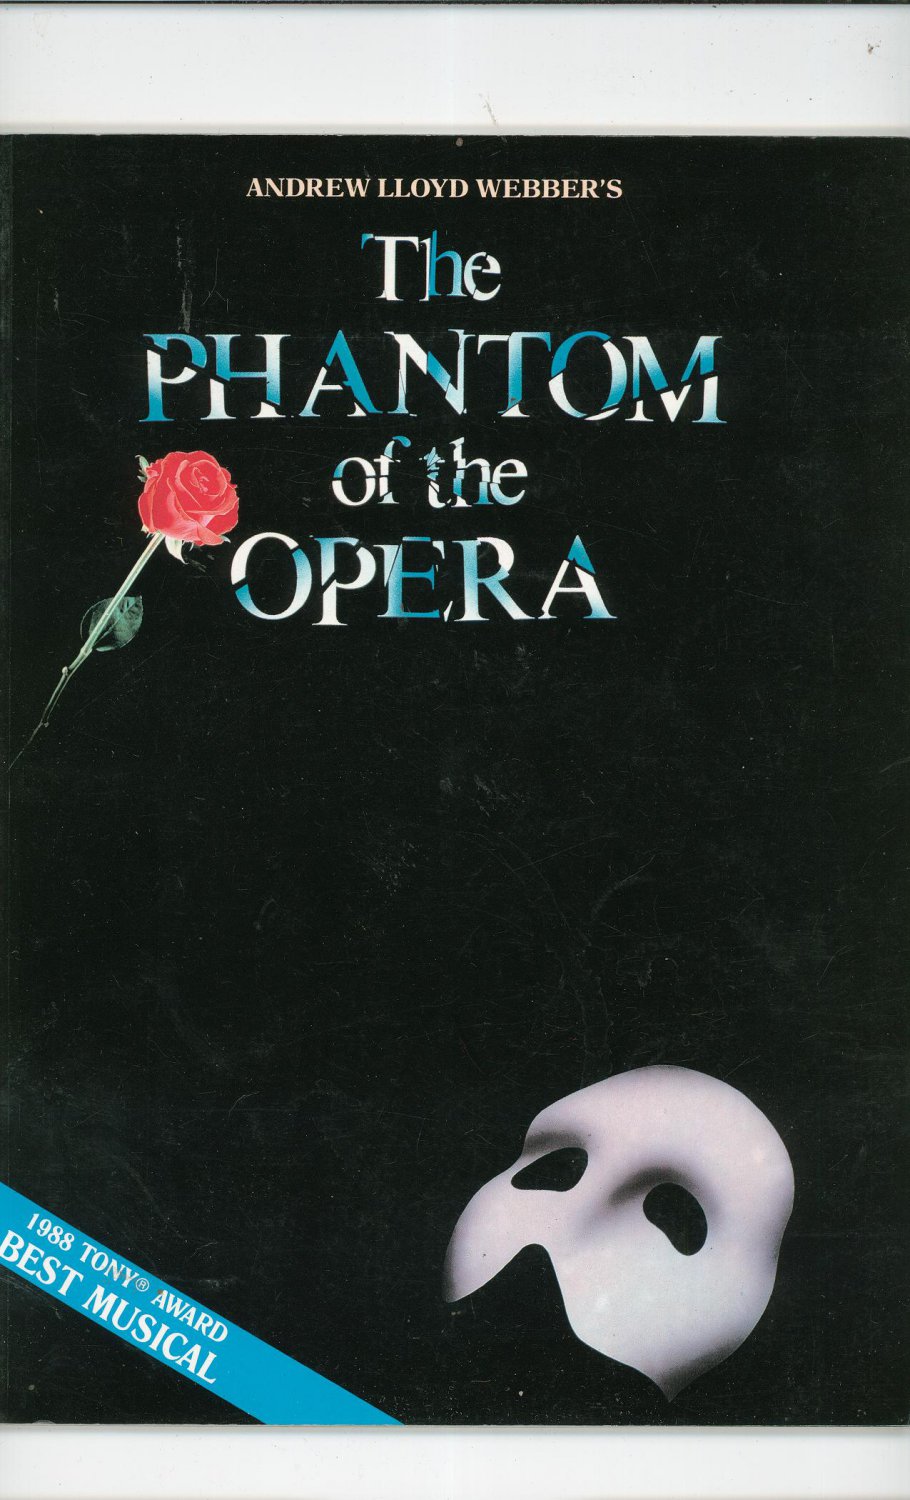 names of the phantom of the opera songs